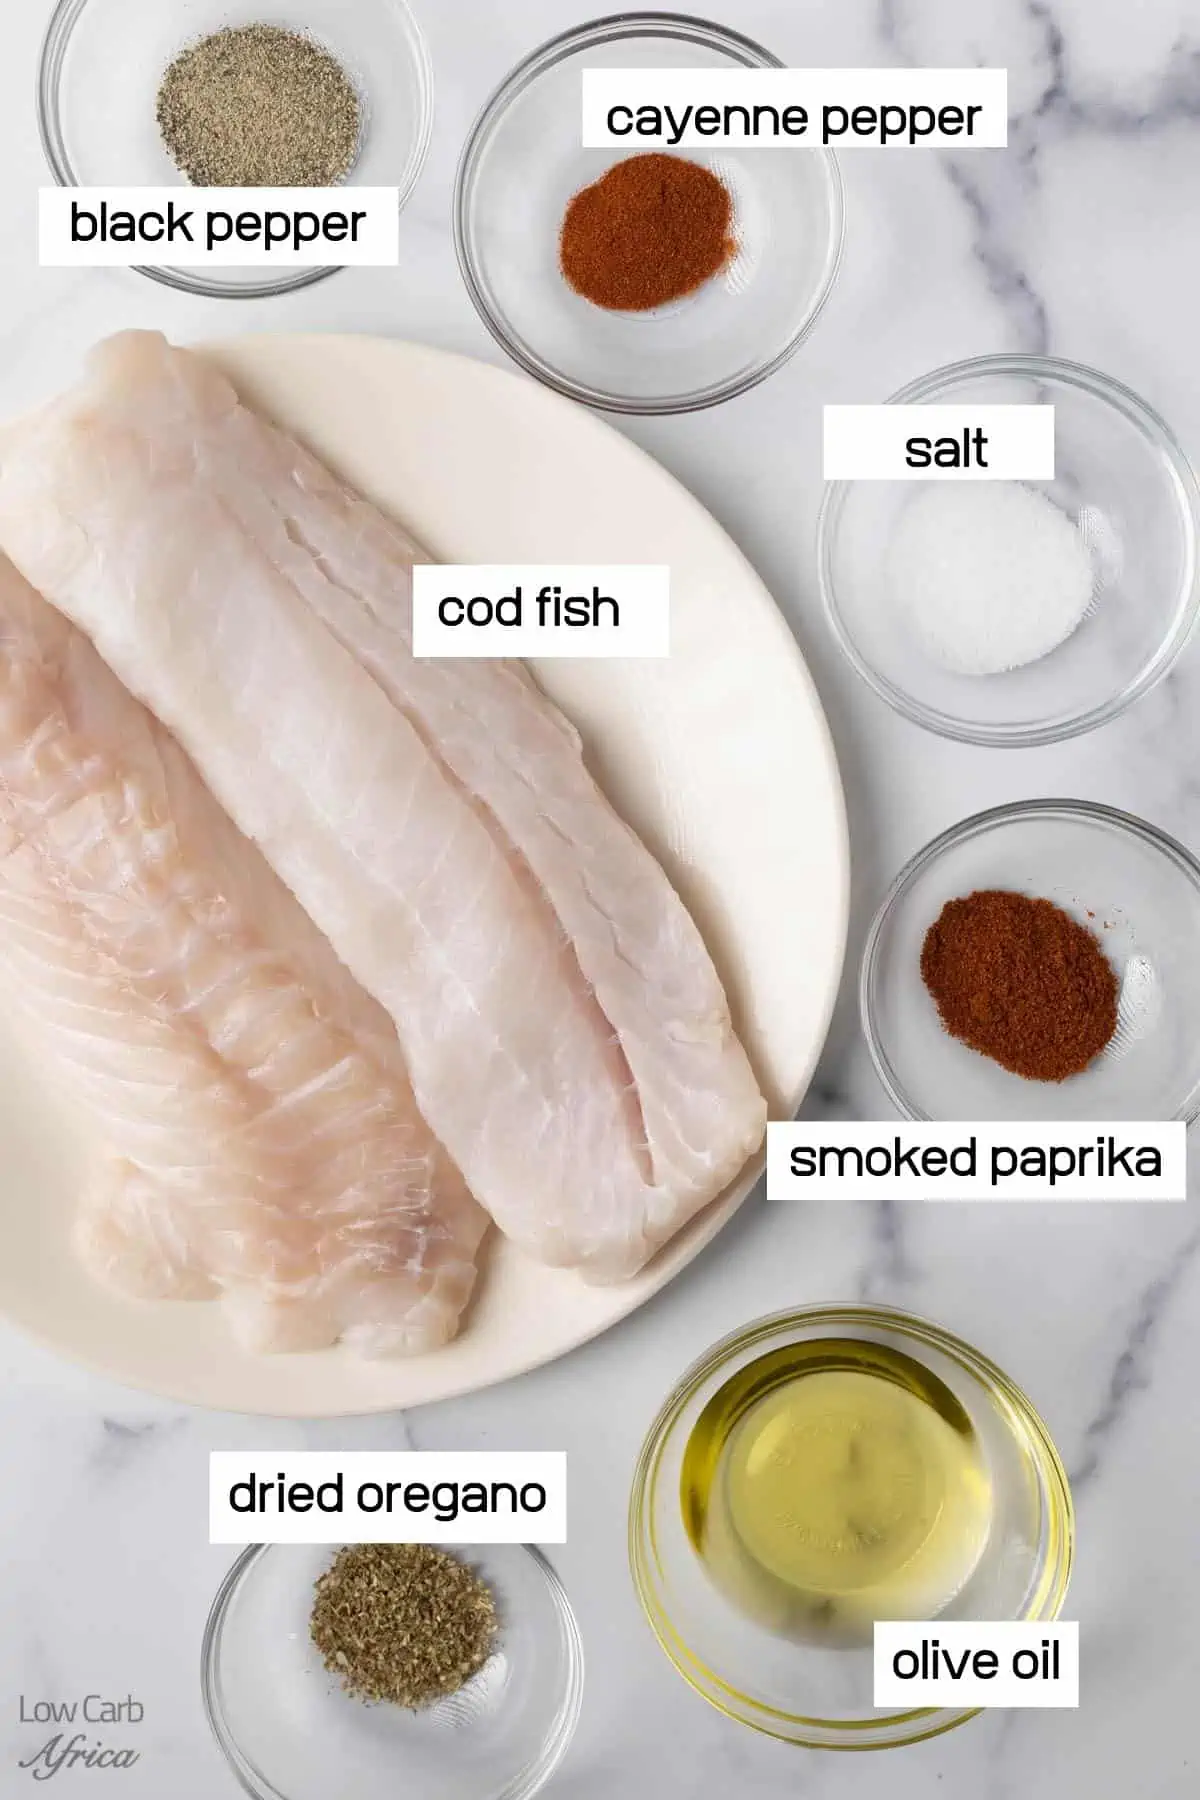 ingredients used to pan fry cod fish.